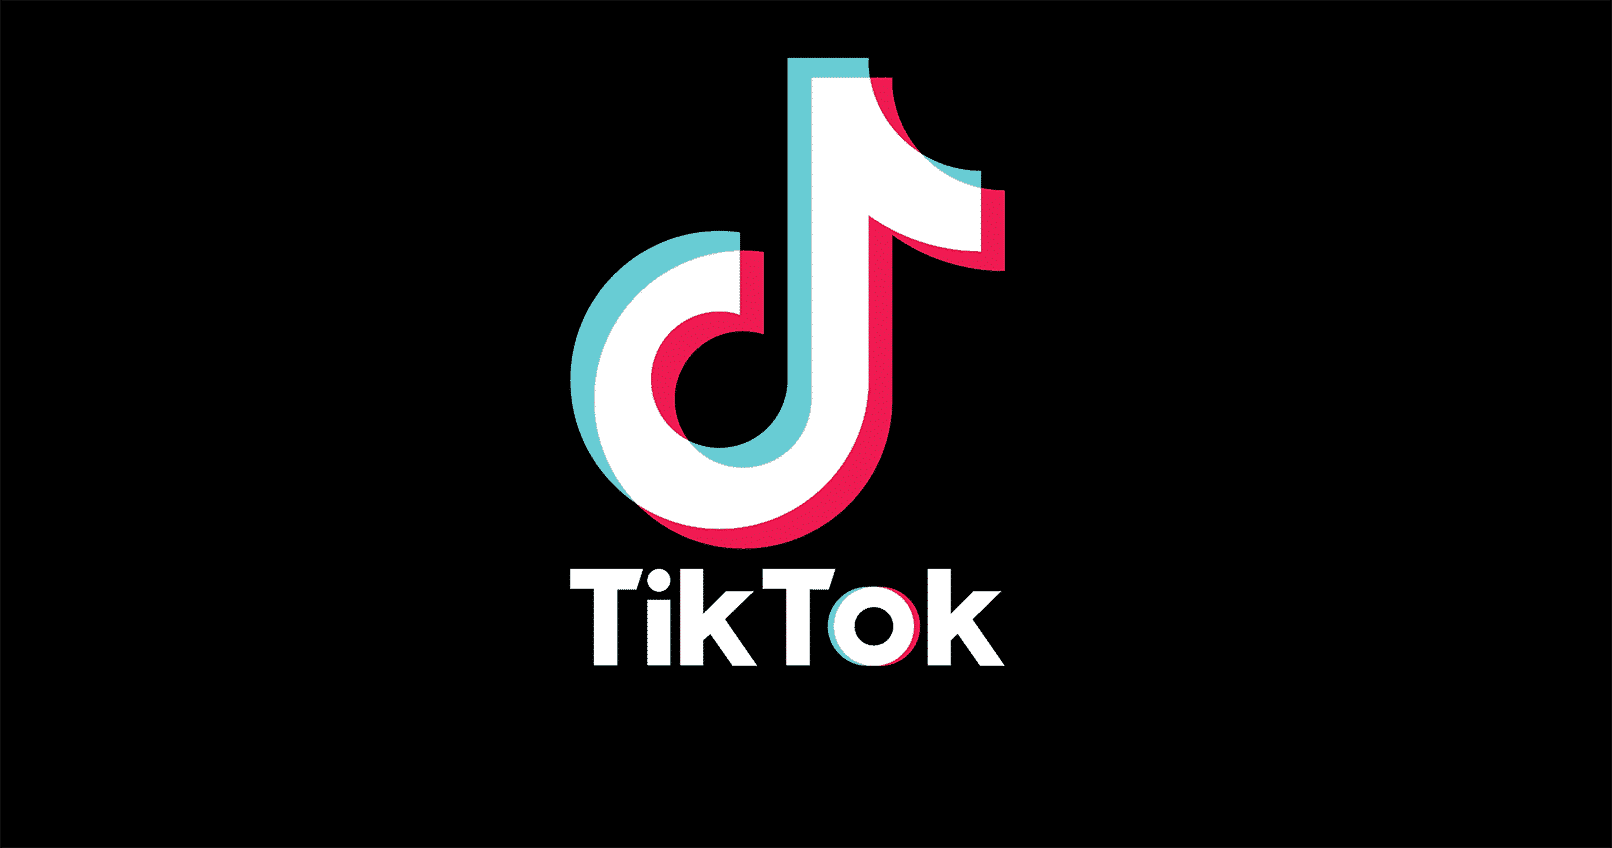 How to properly delete your TikTok account